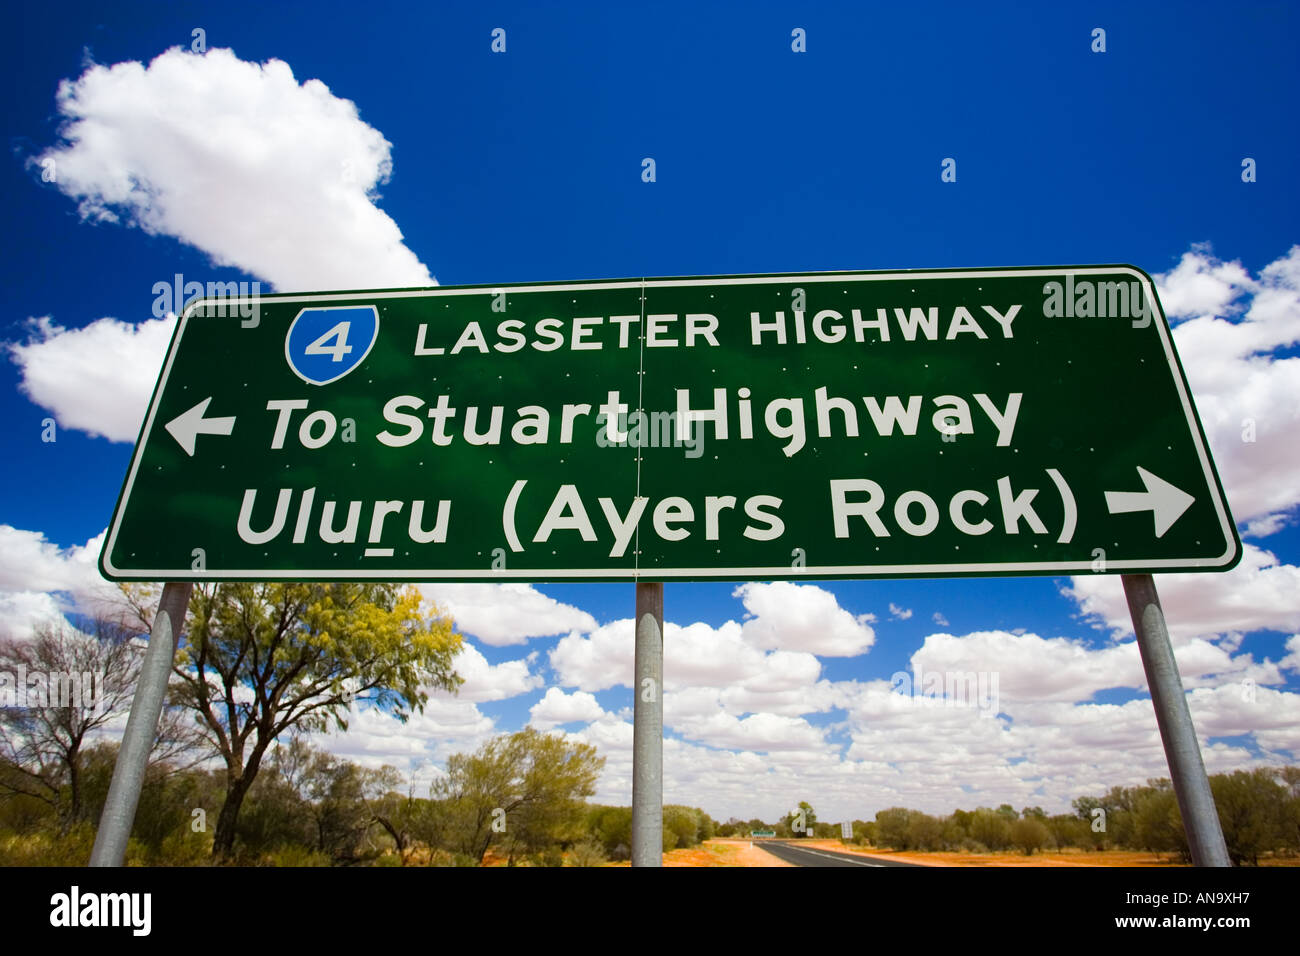 Lasseter highway sign di Stuart Highway e Uluru Ayers Rock di Territorio del Nord Australia Foto Stock